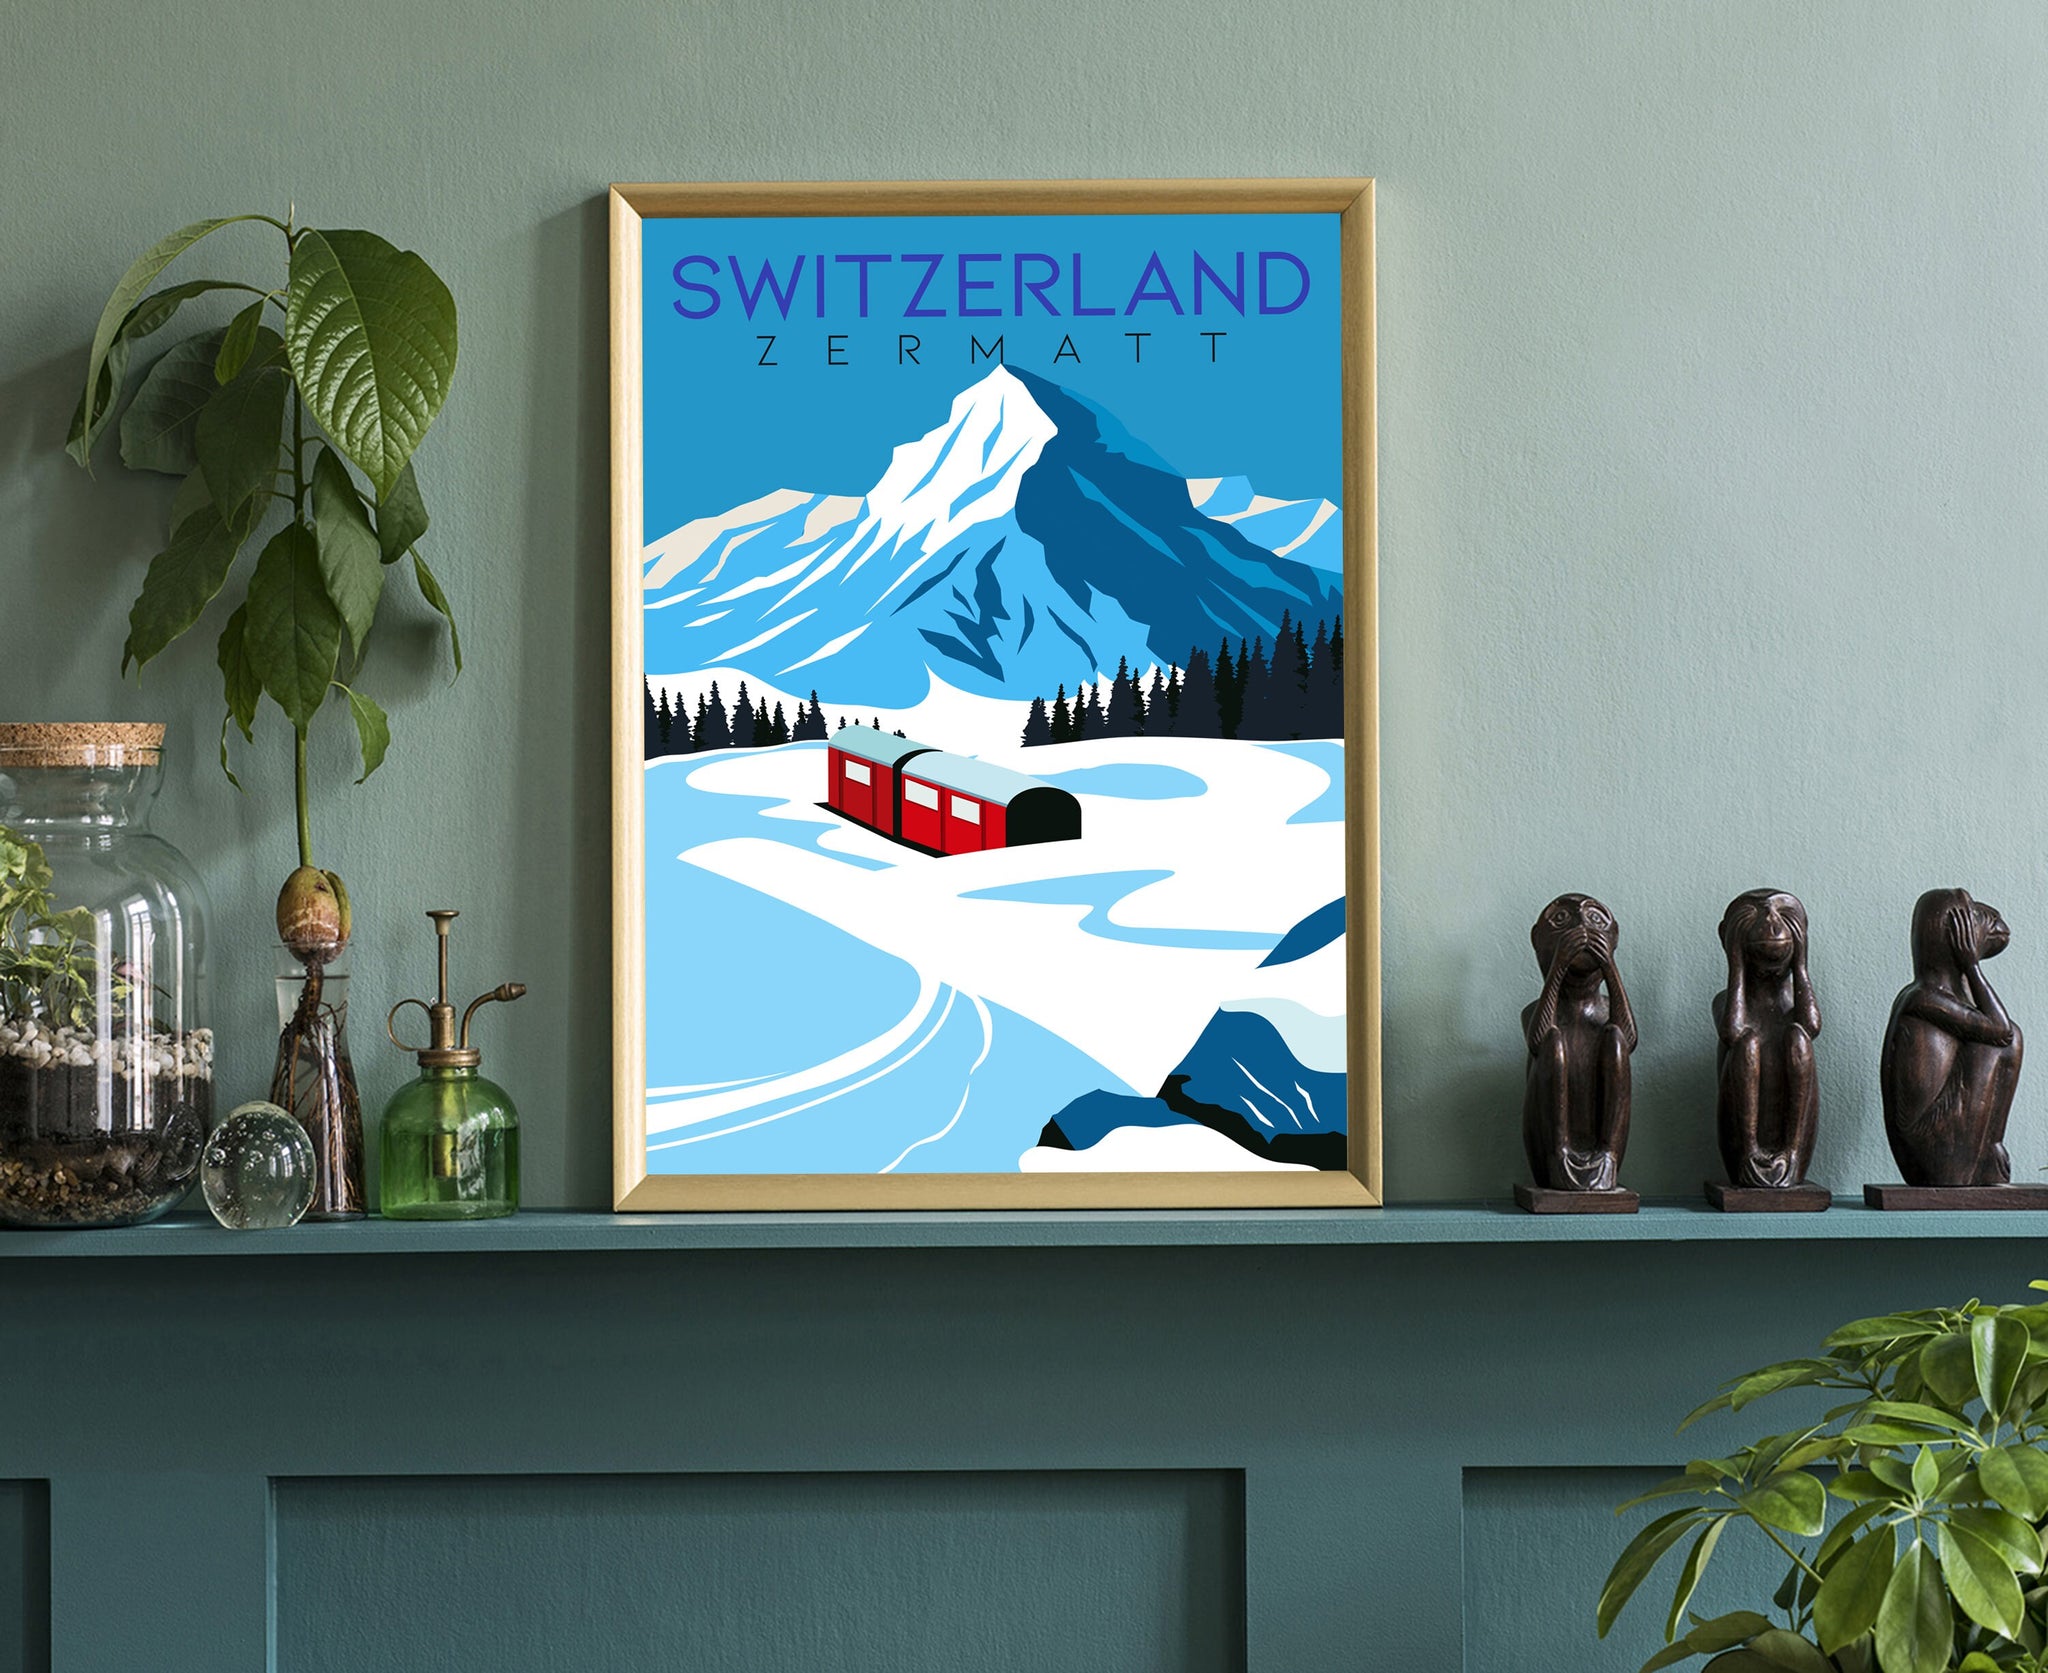 SWITZERLAND ZERMATT travel poster, Switzerland cityscape and landmark poster wall art, Home wall art, Office wall Decorations, Gift for him